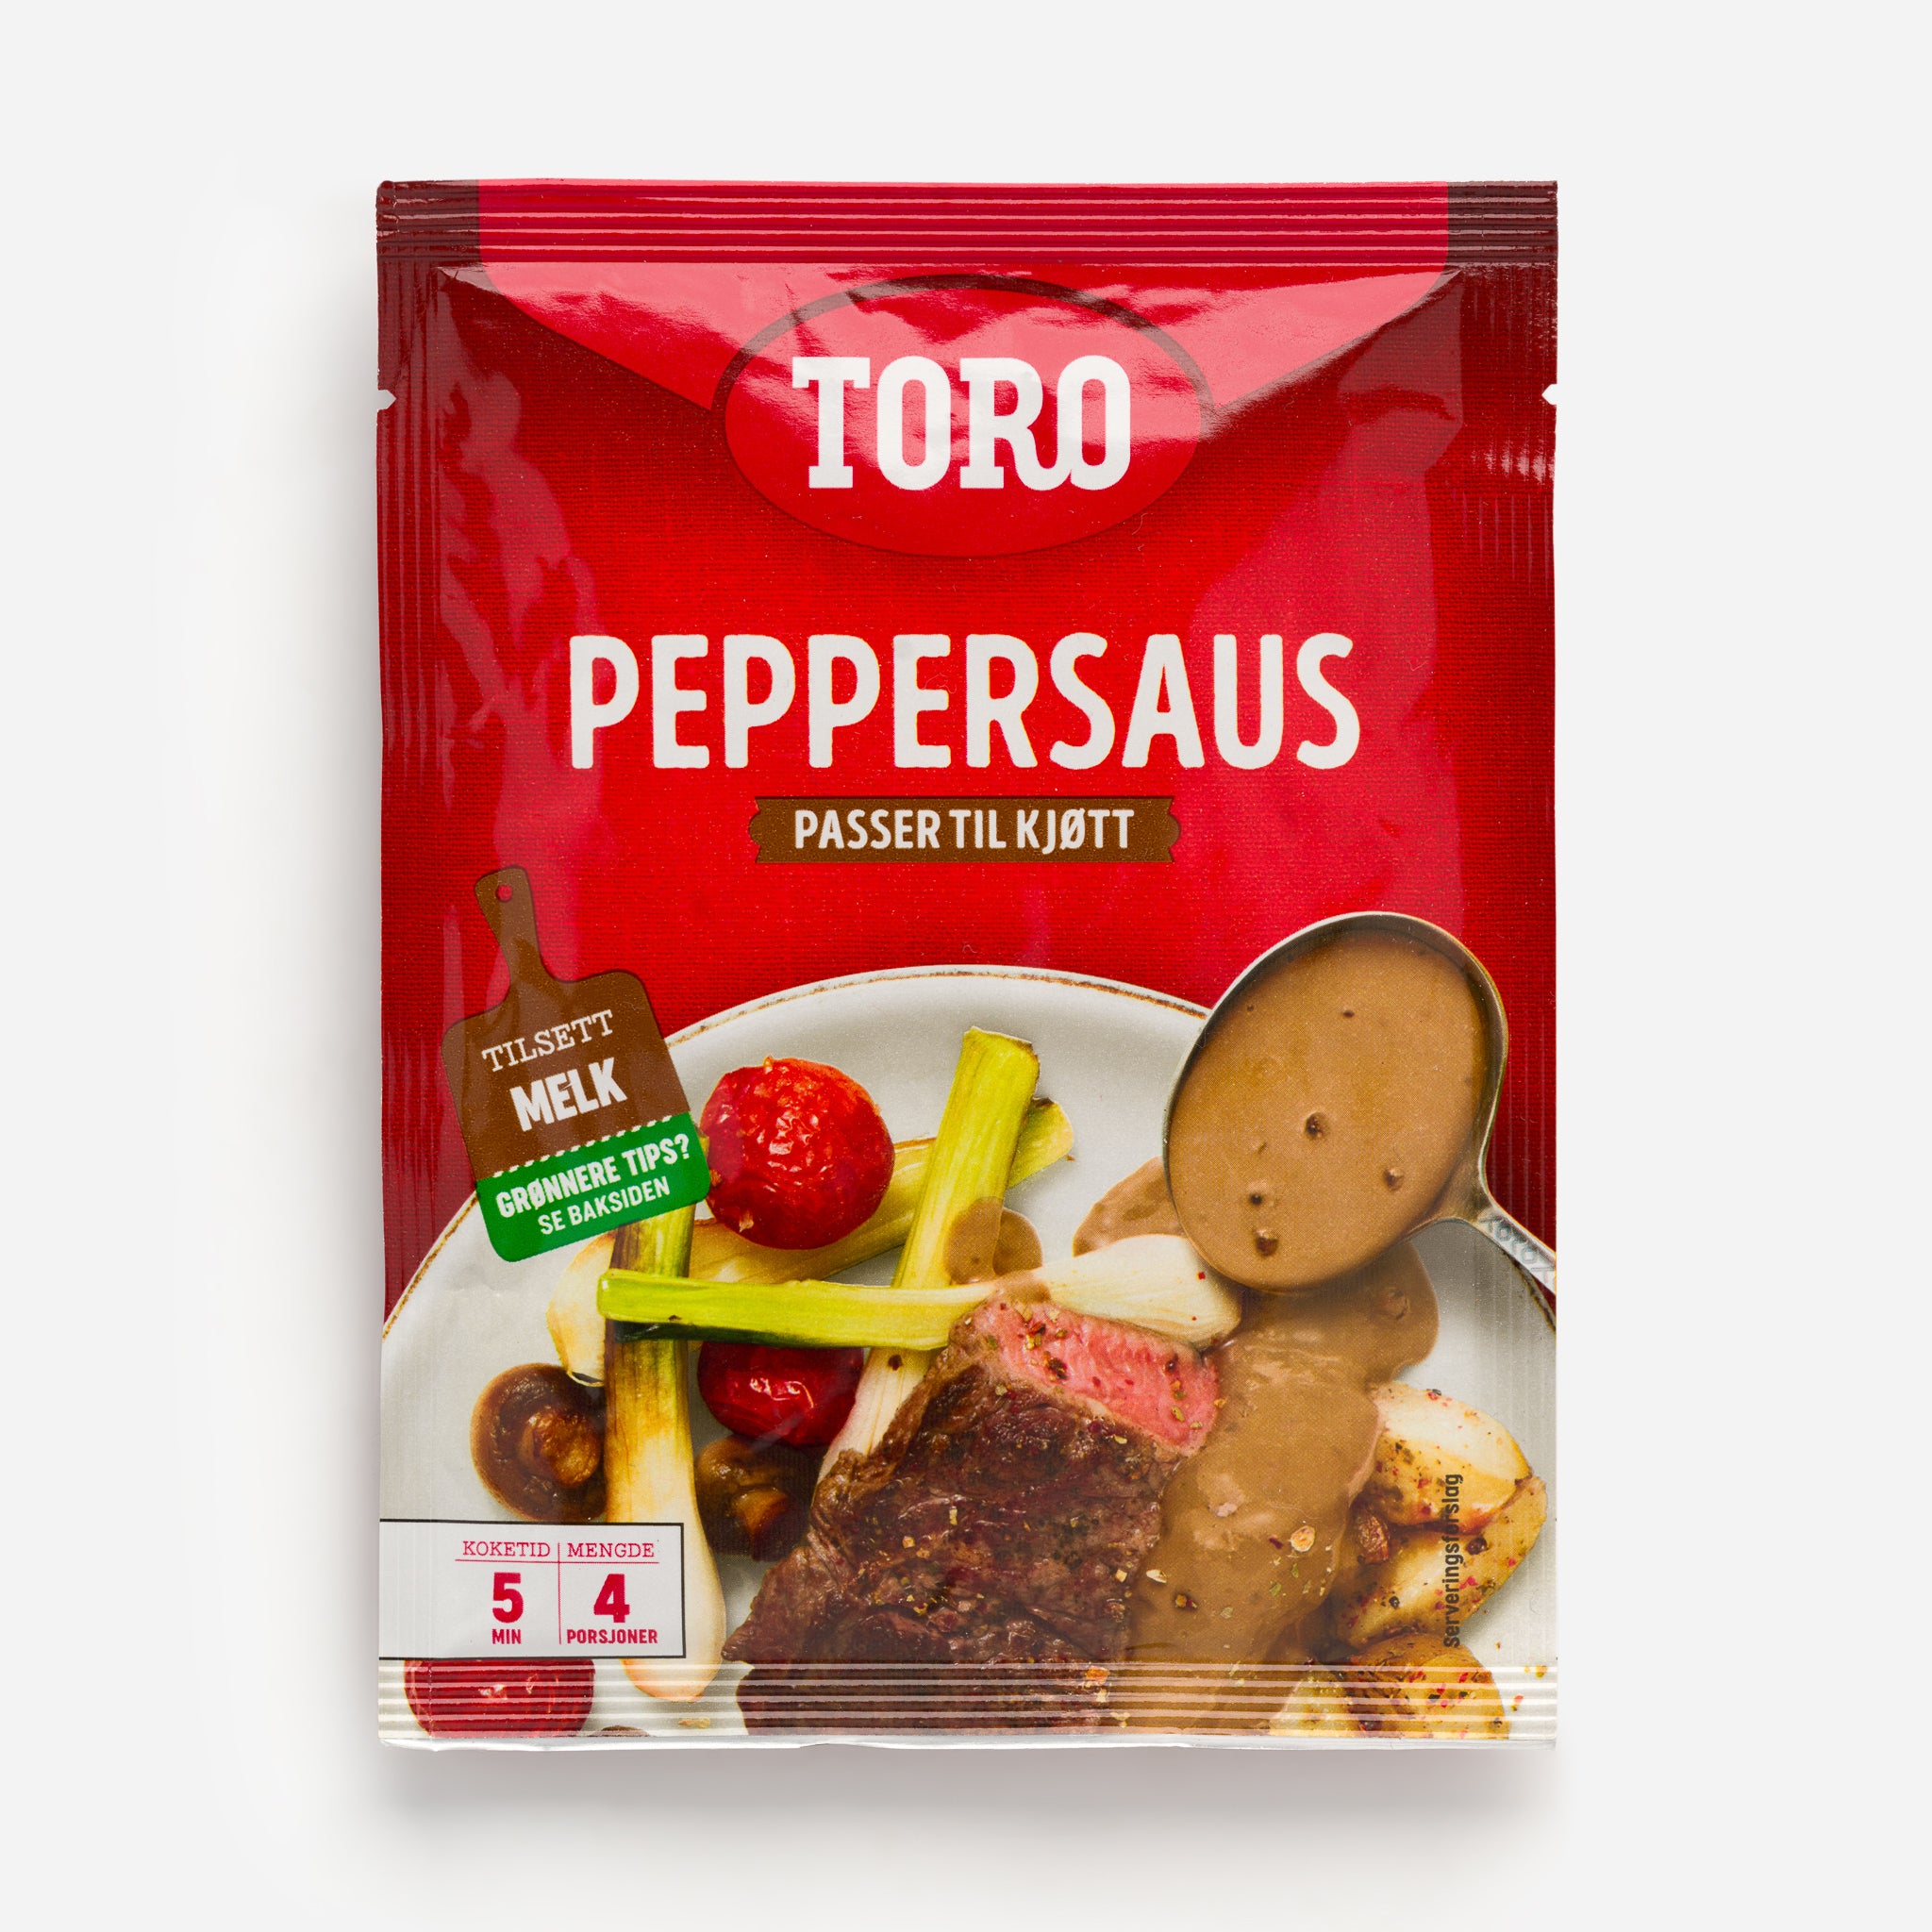 Pepper Sauce from Toro